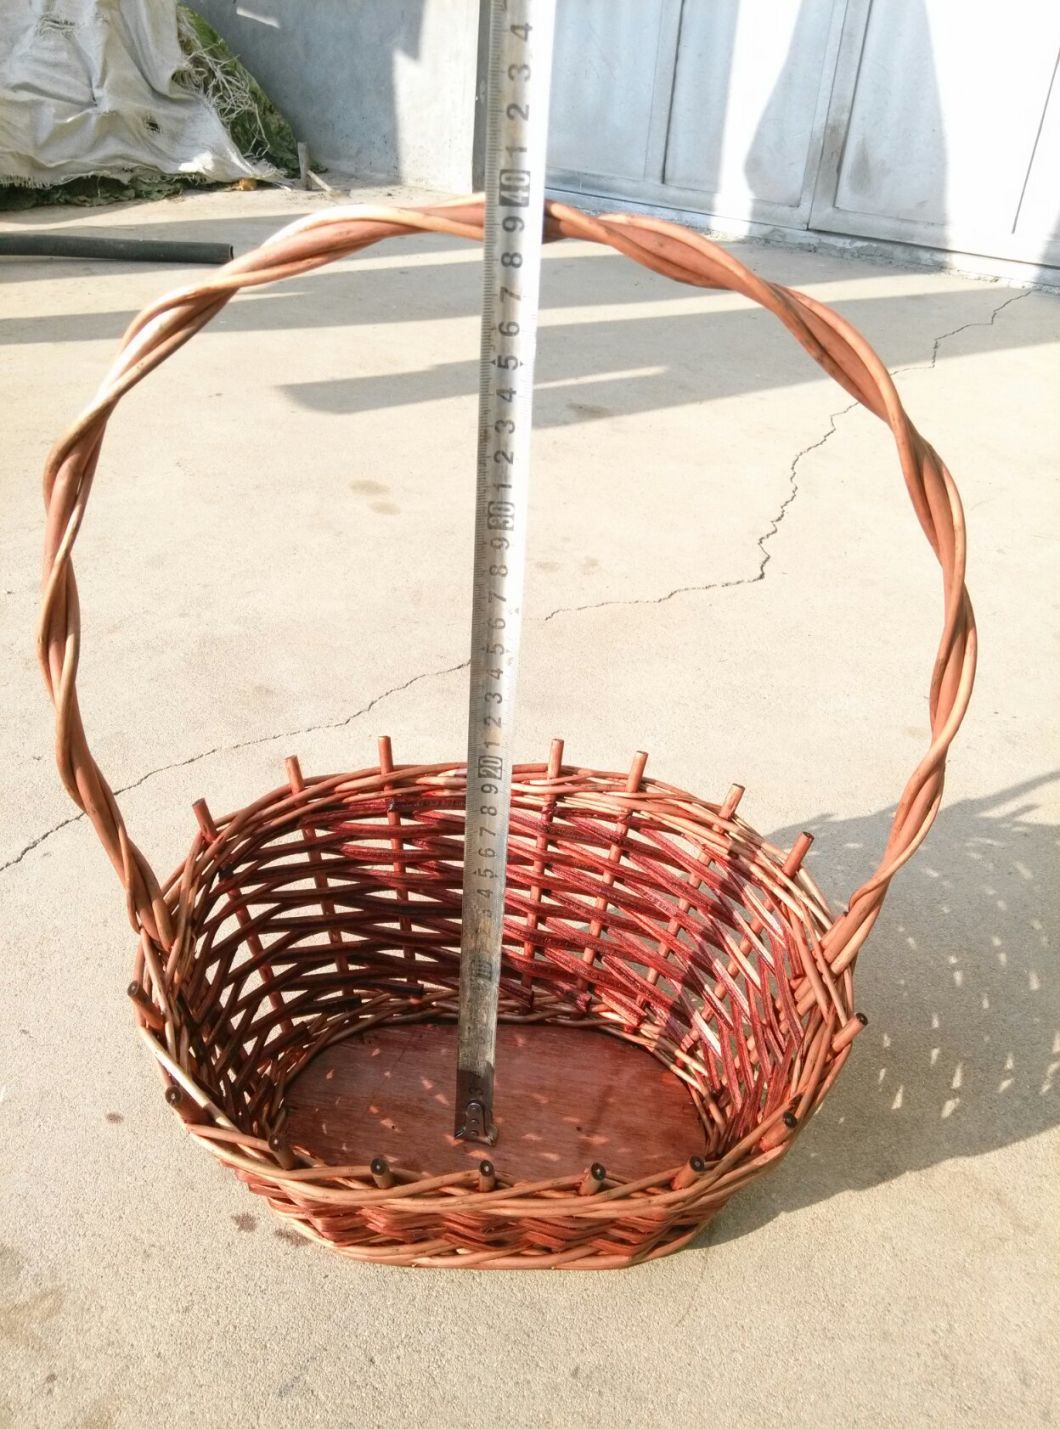 Brown Willow Wicker Hanging Basket